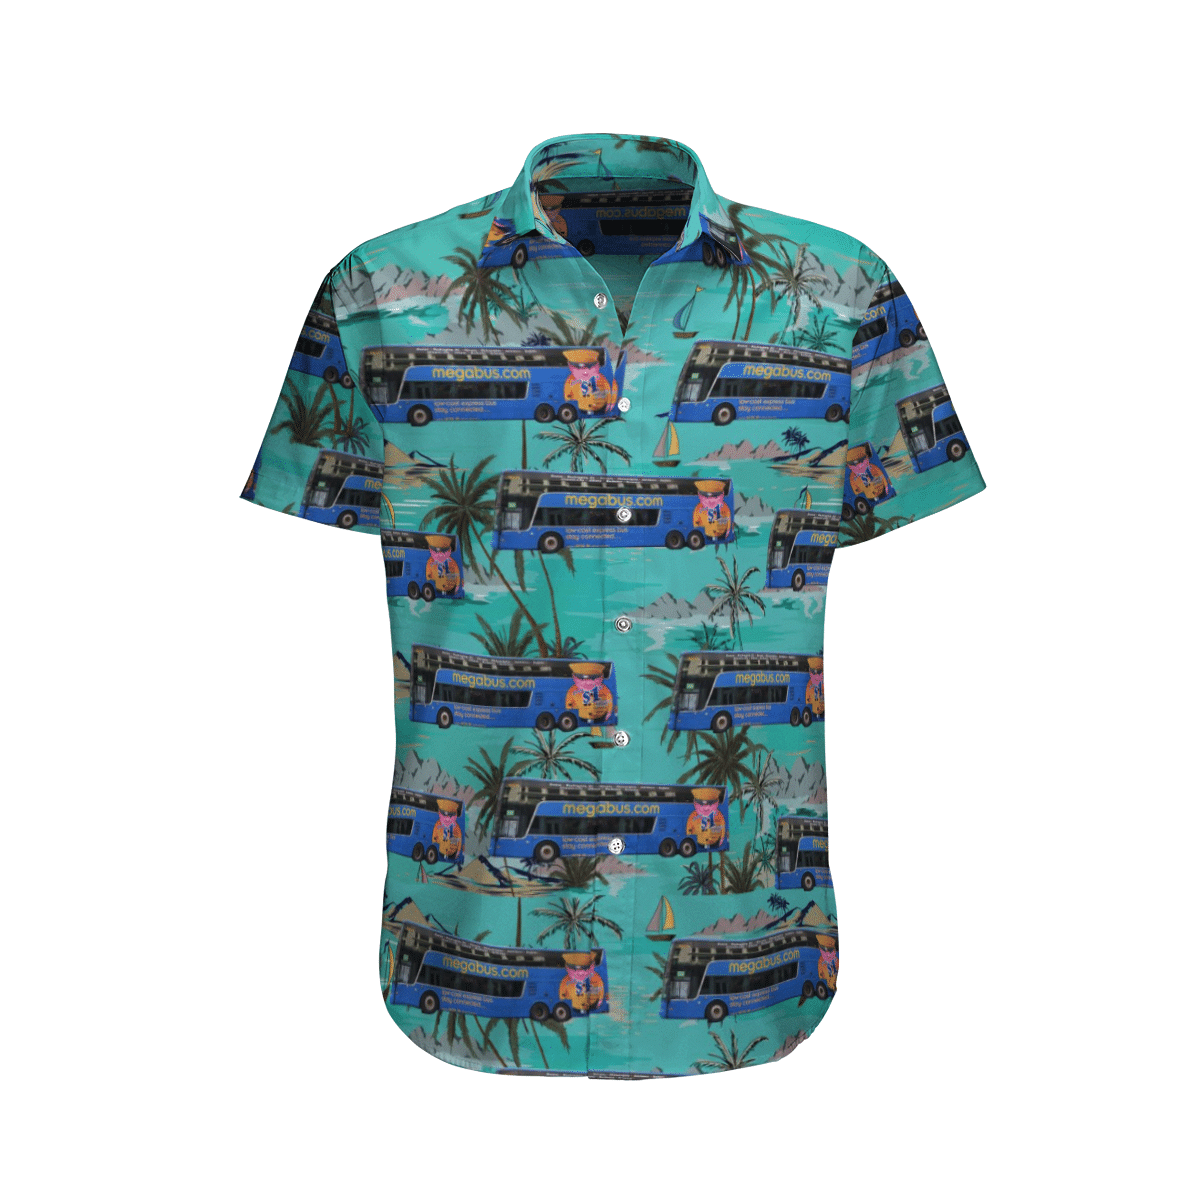 Get a new Hawaiian shirt to enjoy summer vacation 180